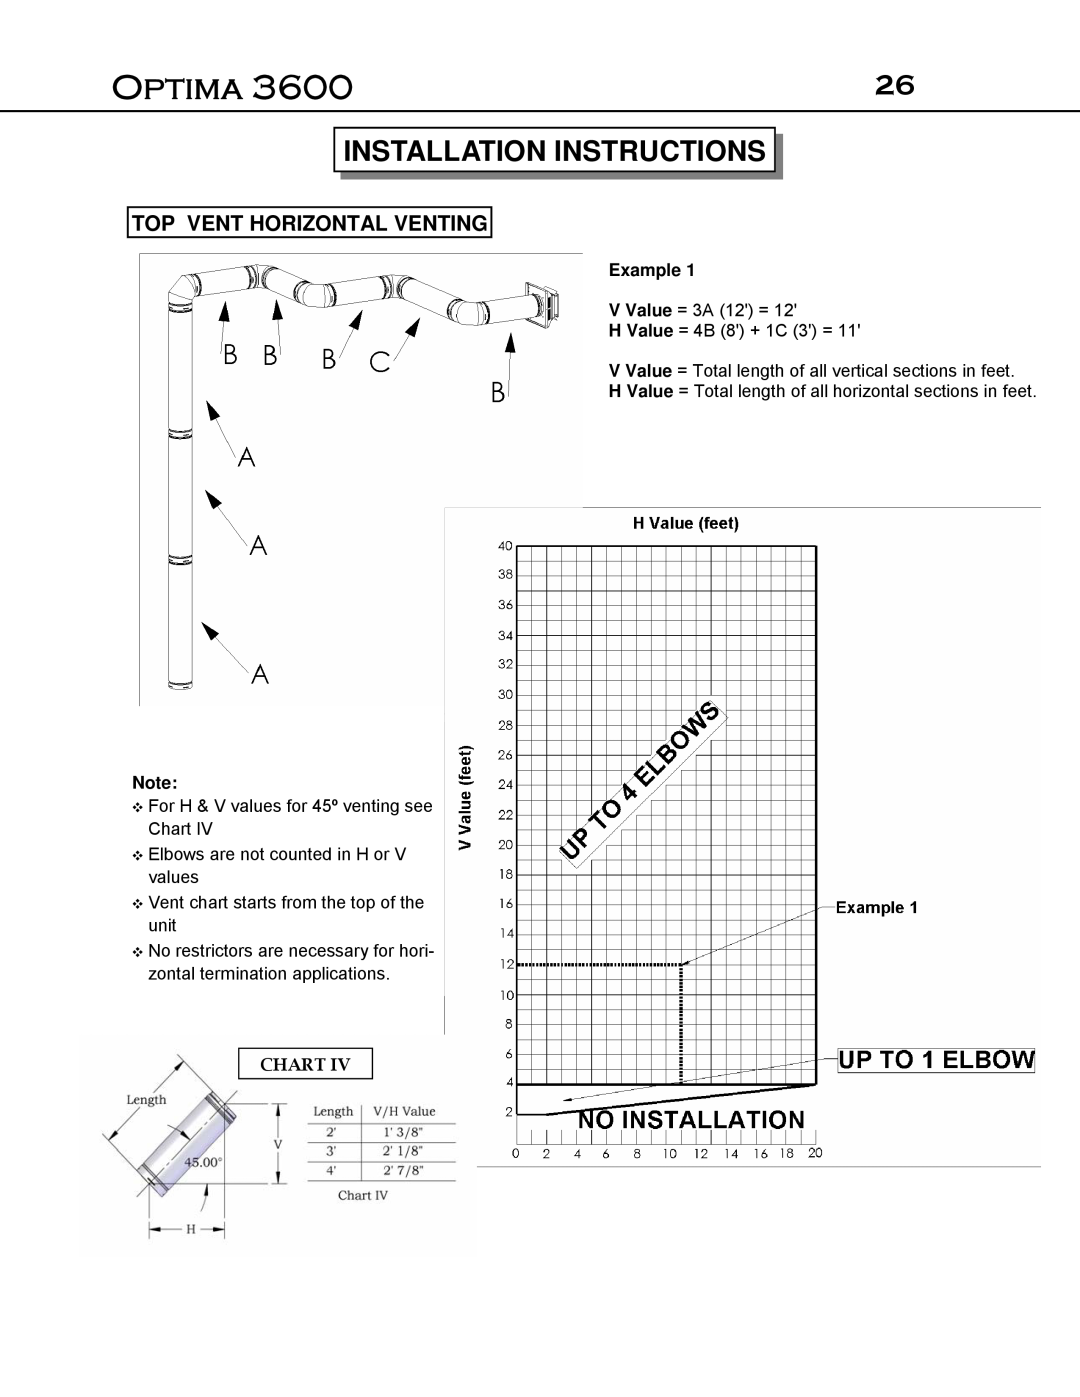 Optima Company Optima 3600O manual Top Vent Horizontal Venting, Installation Instructions, Chart 